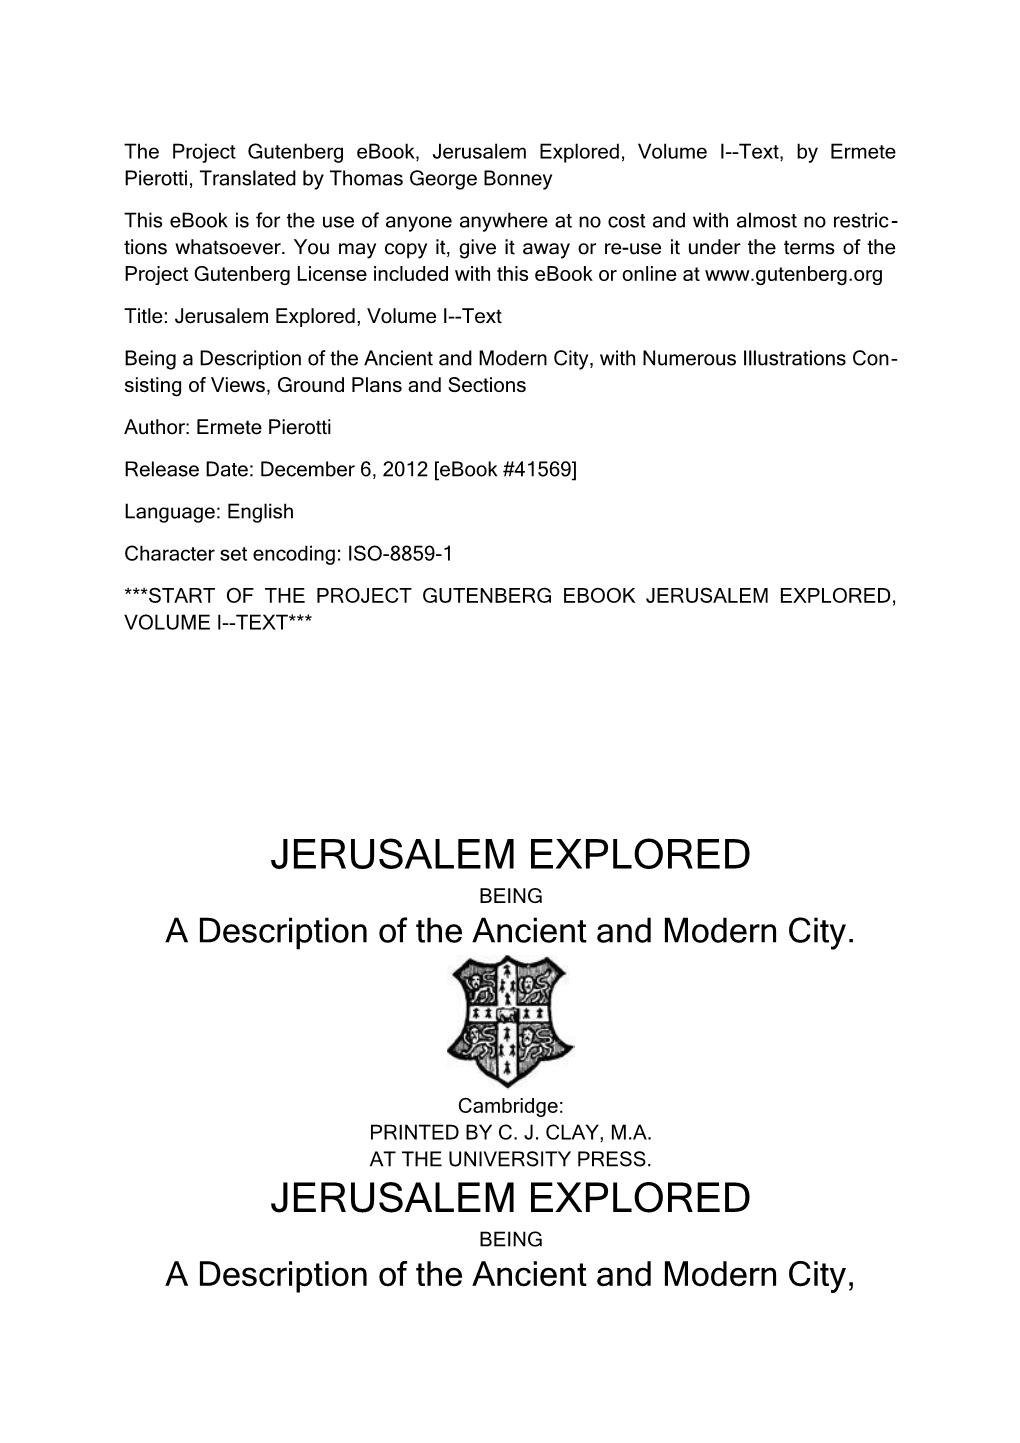 Title: Jerusalem Explored, Volume I Text